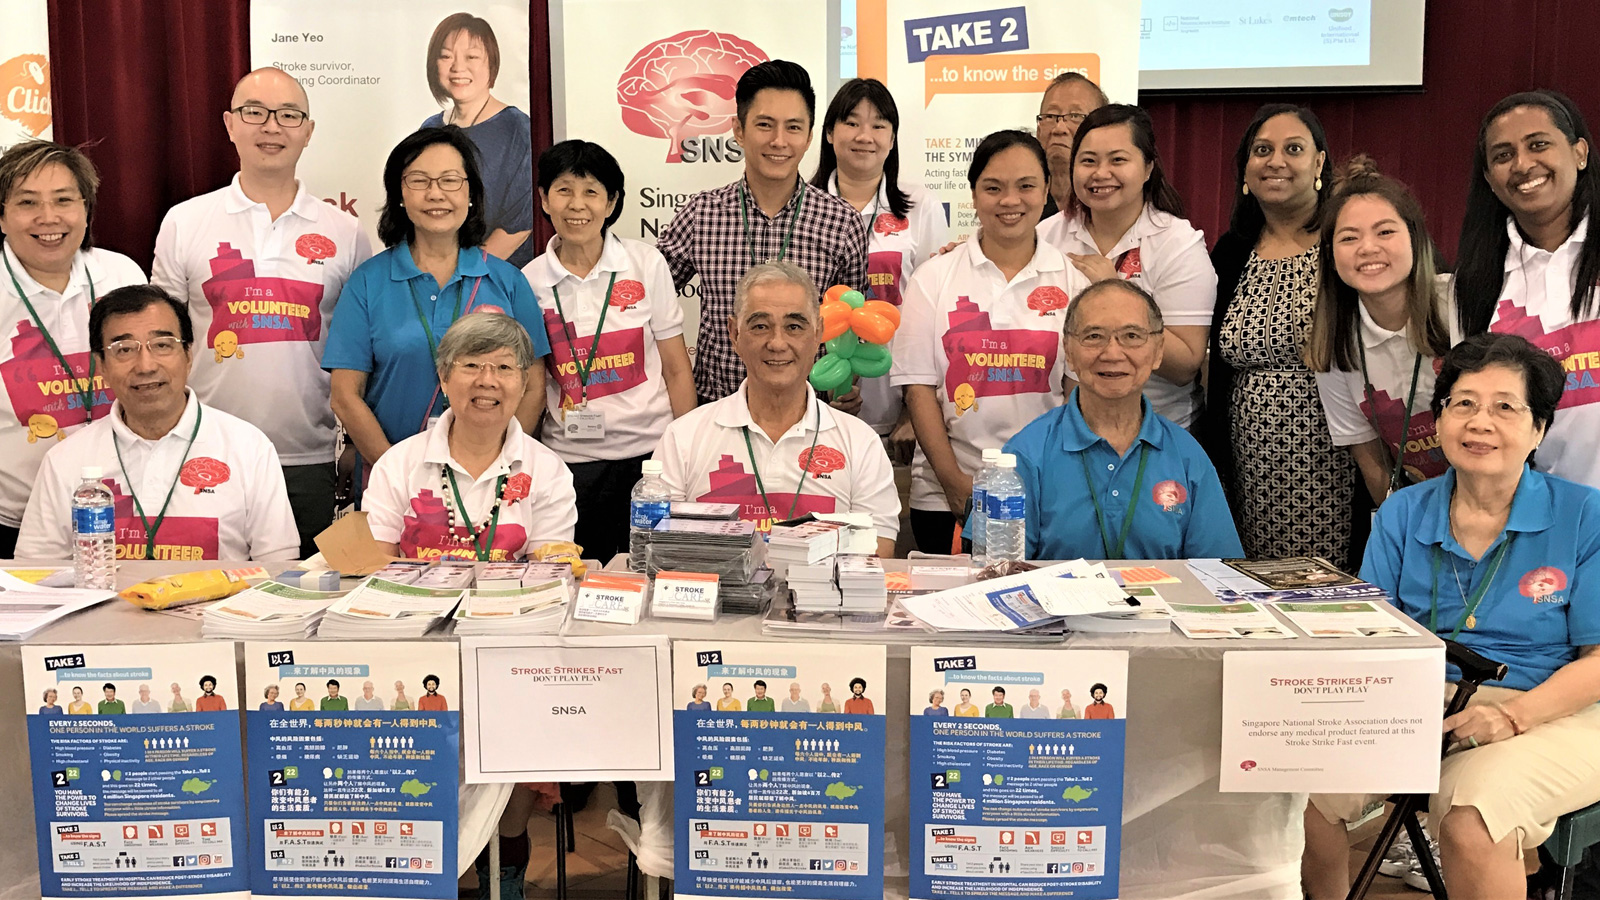 The Singapore National Stroke Association (SNSA)